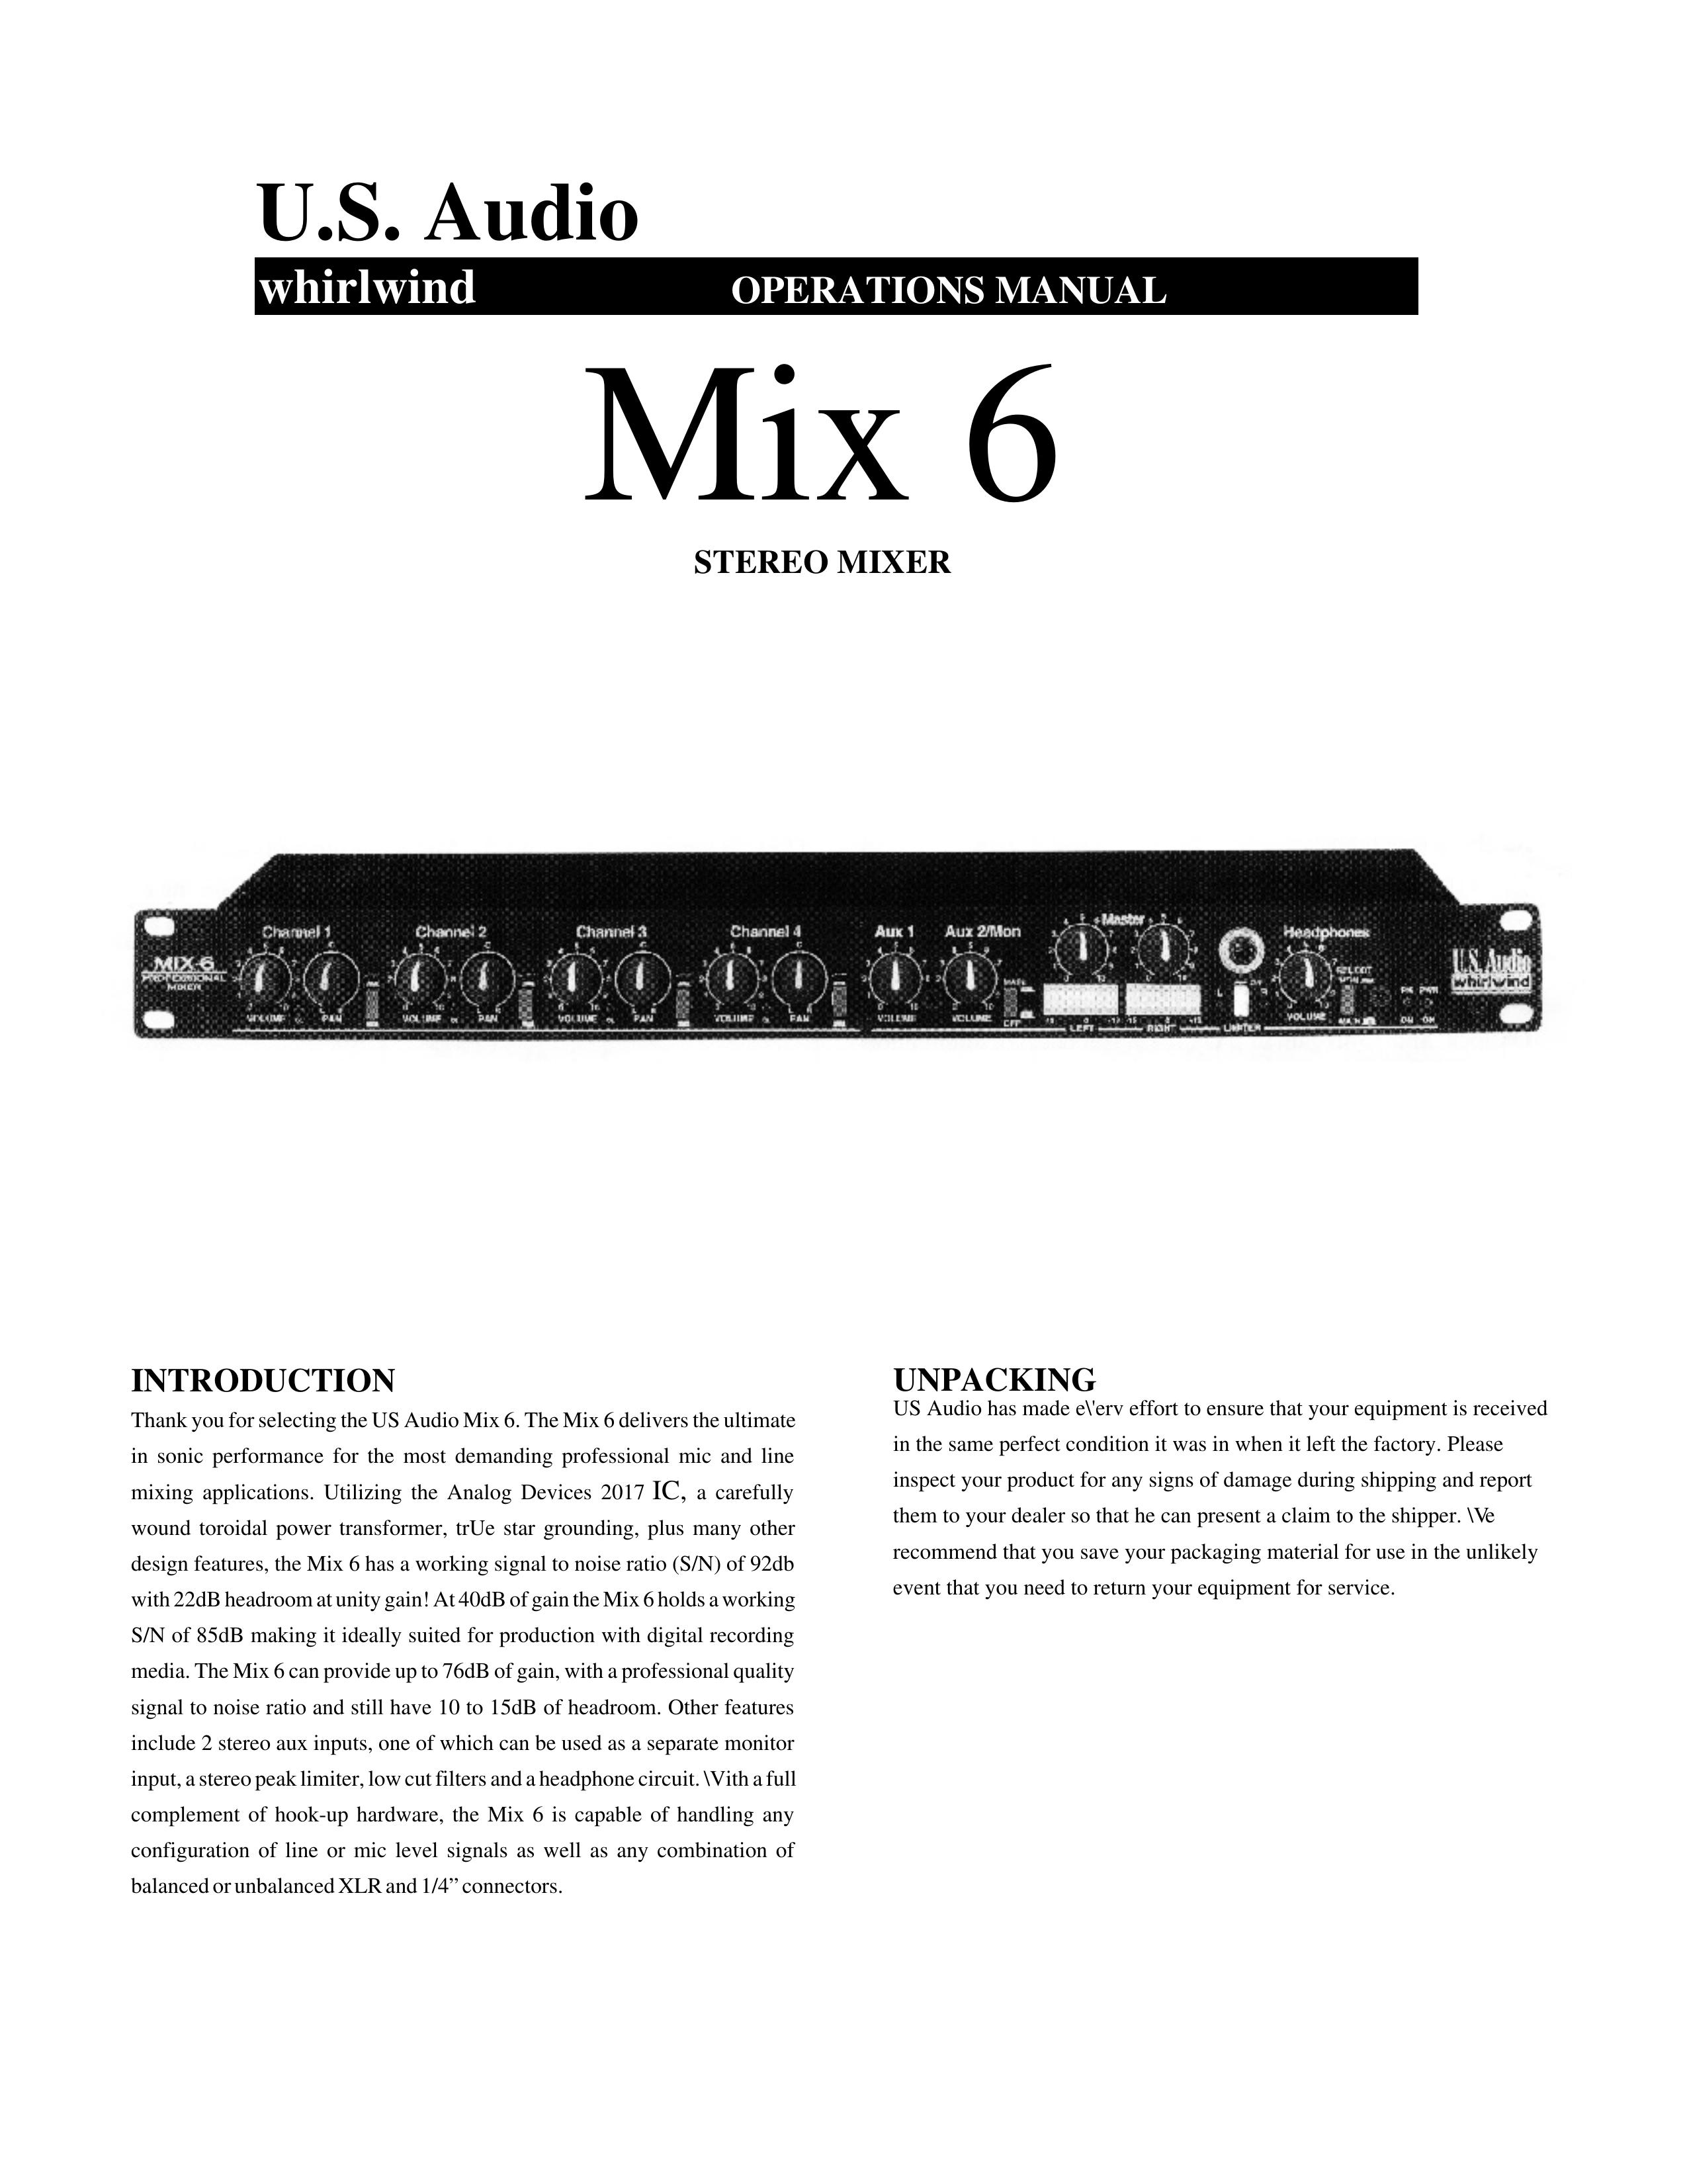 Whirlwind MIX 6 Music Mixer User Manual